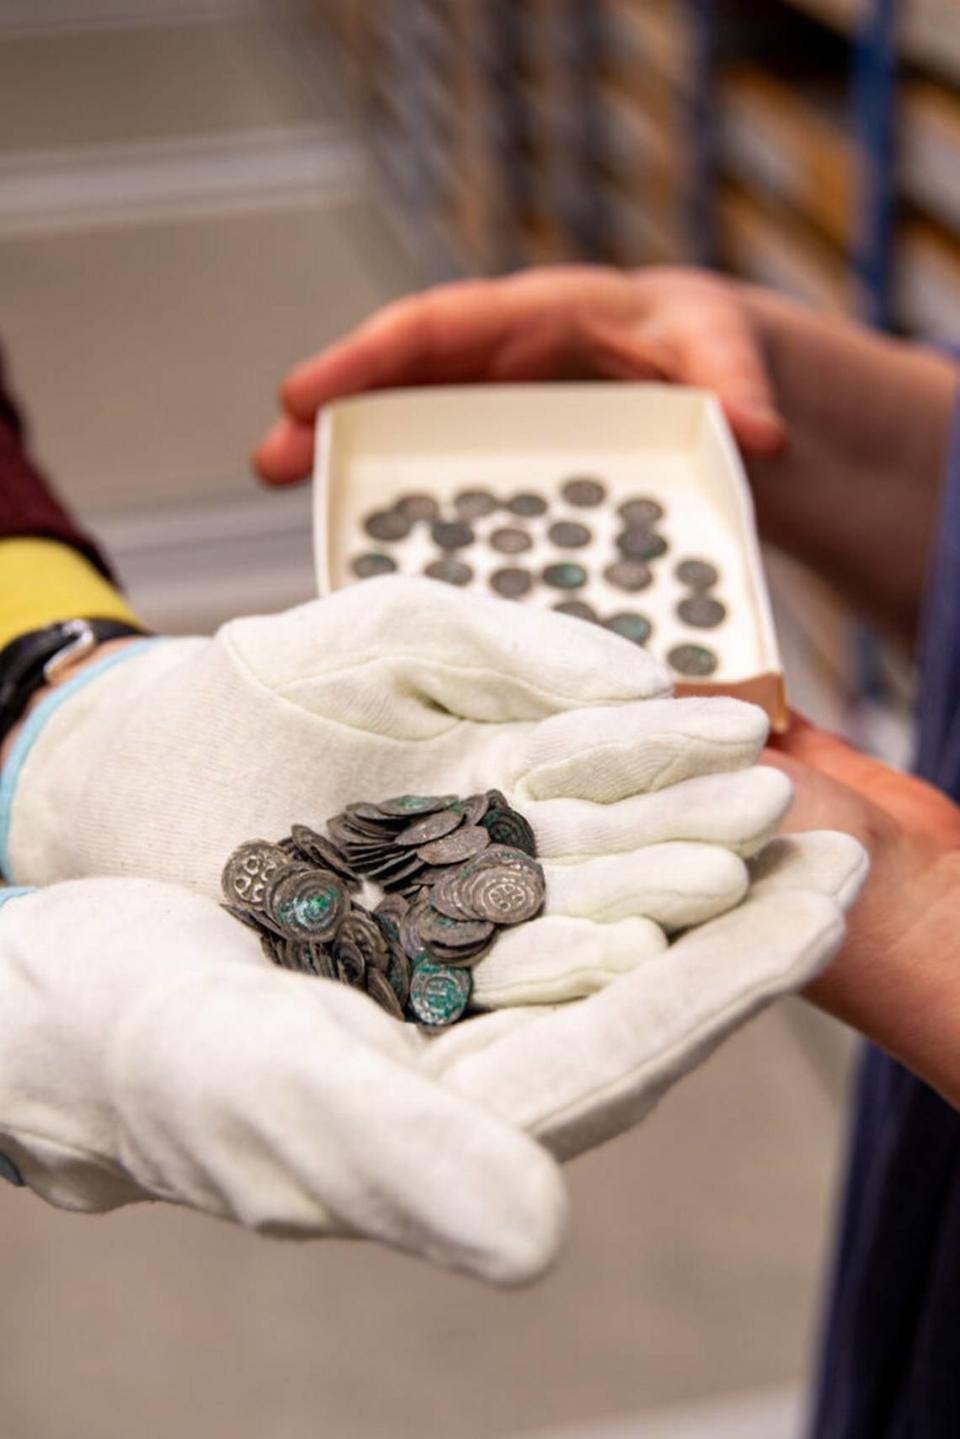 The 800-year-old silver coins found at Brahekyrkan church in Visingsö.